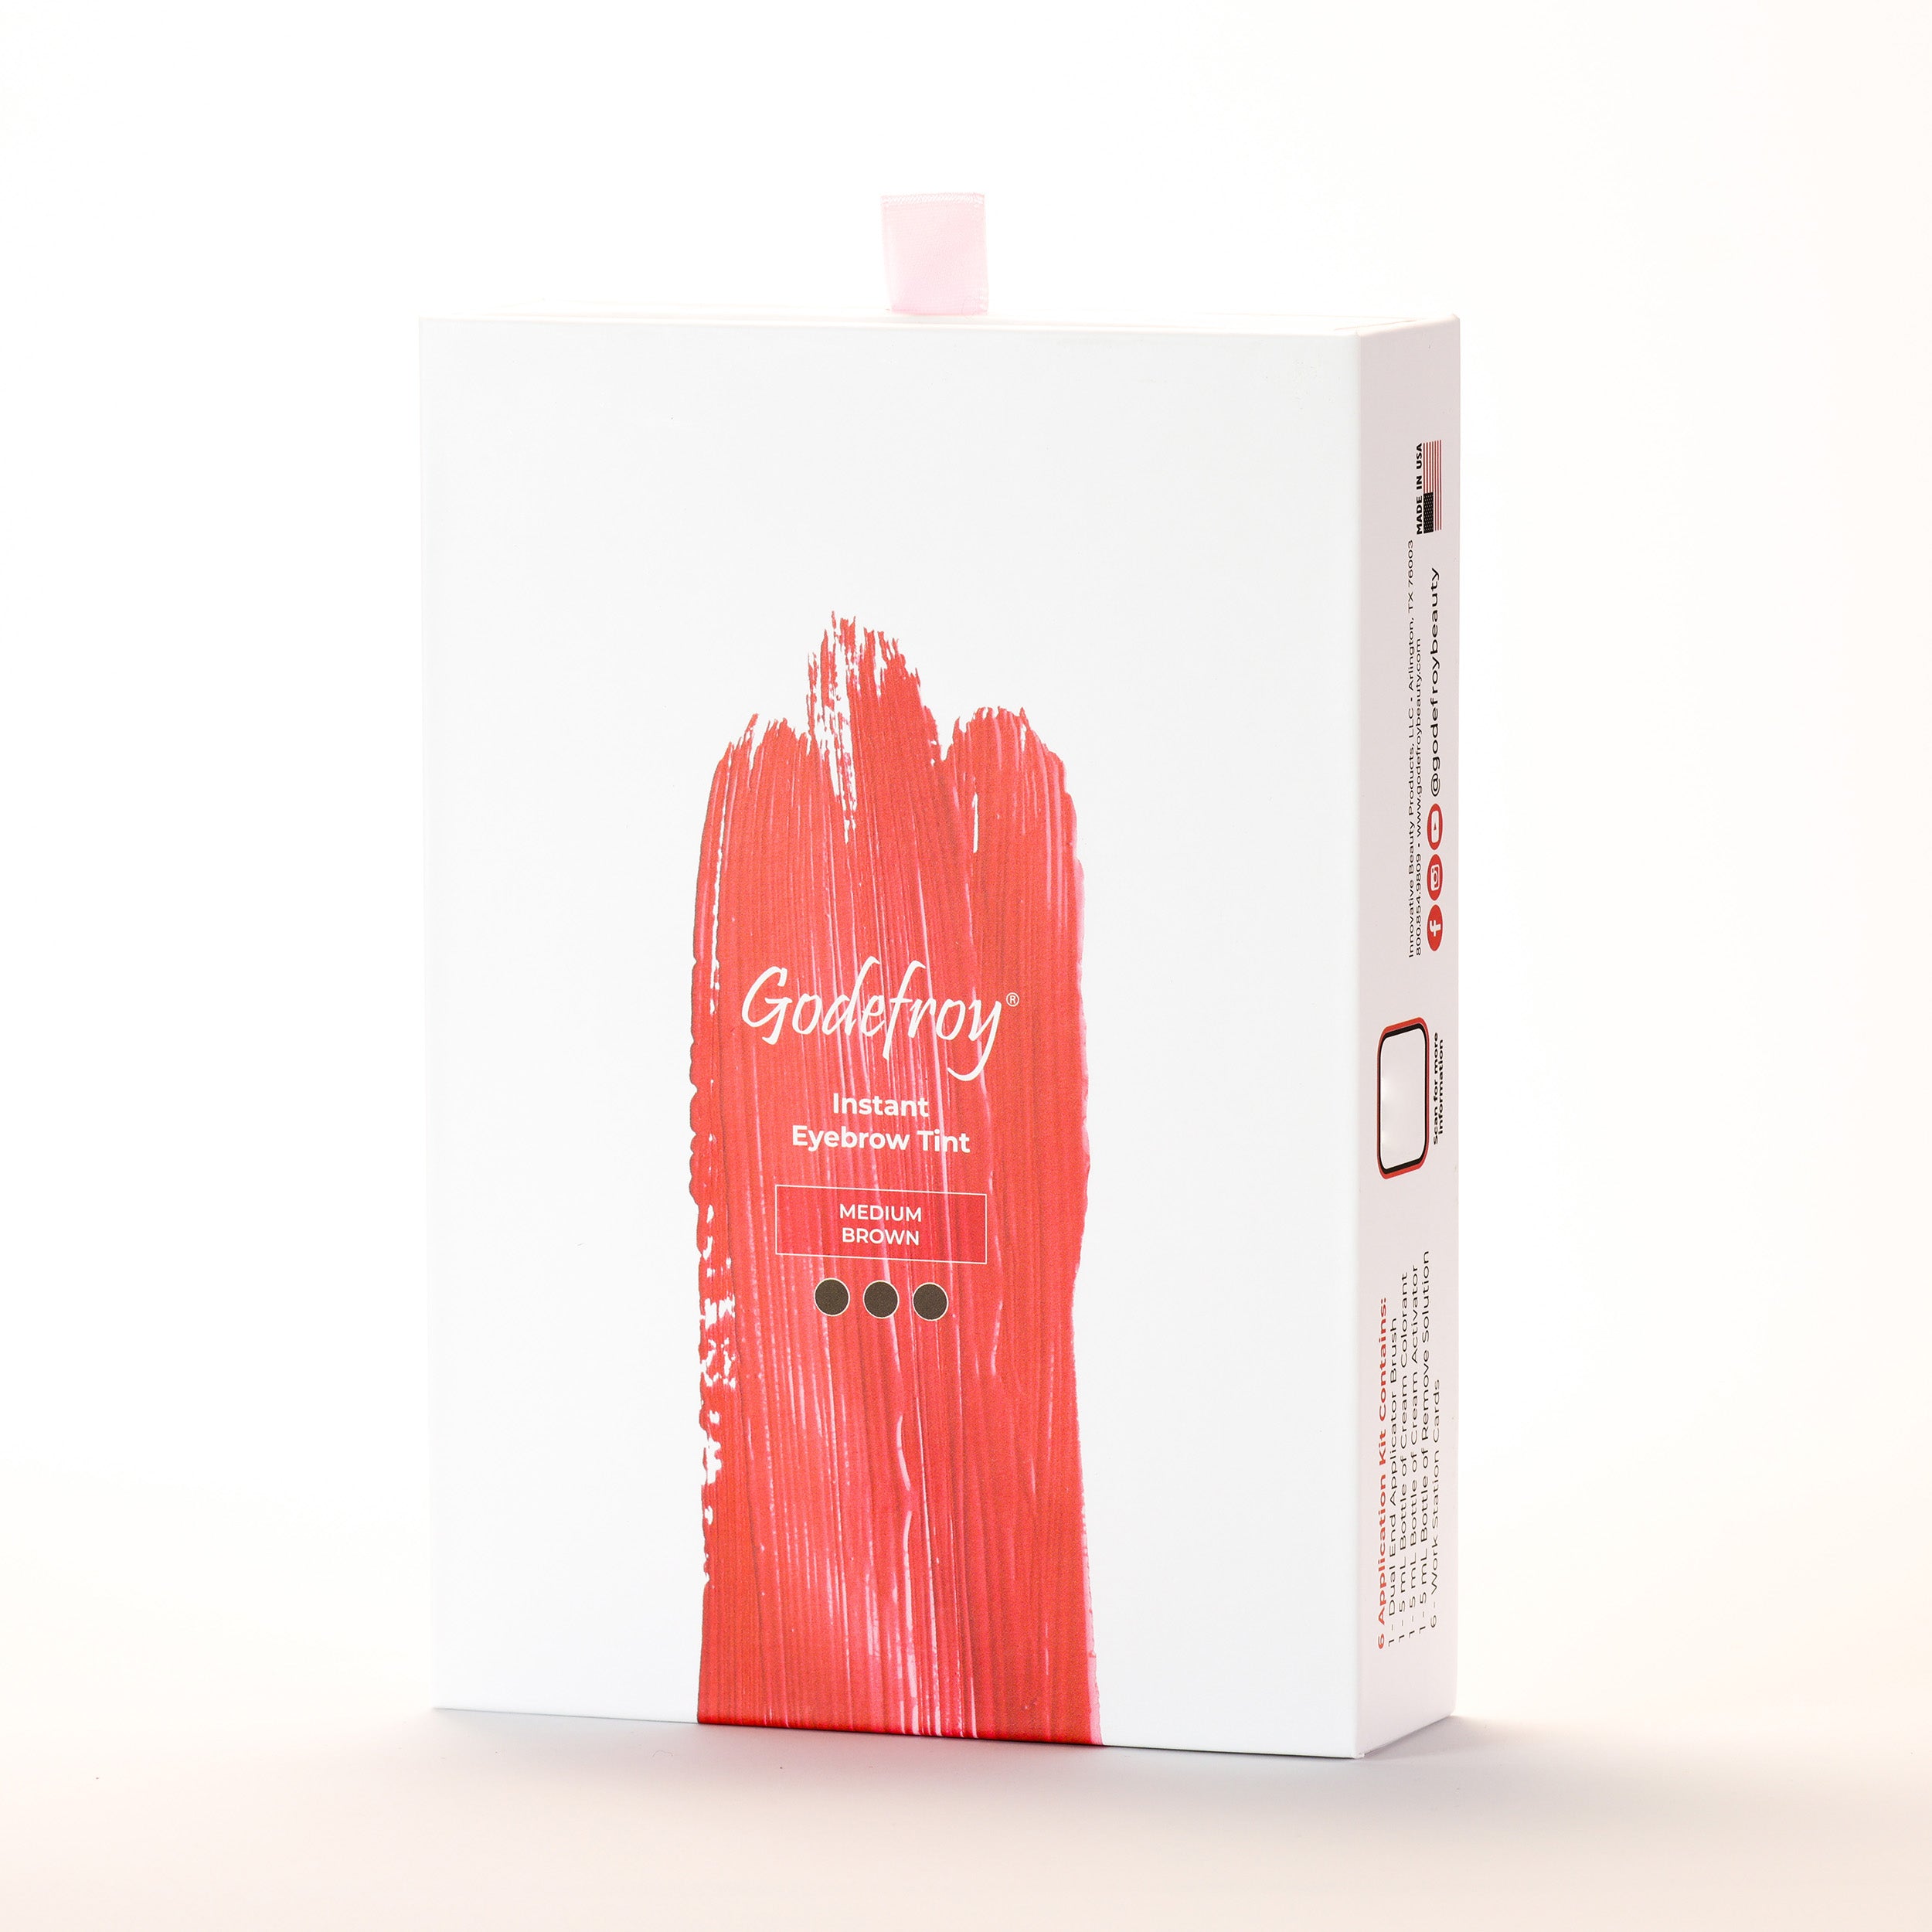 Godefroy Tint Kit Graphite 20 Application Kit